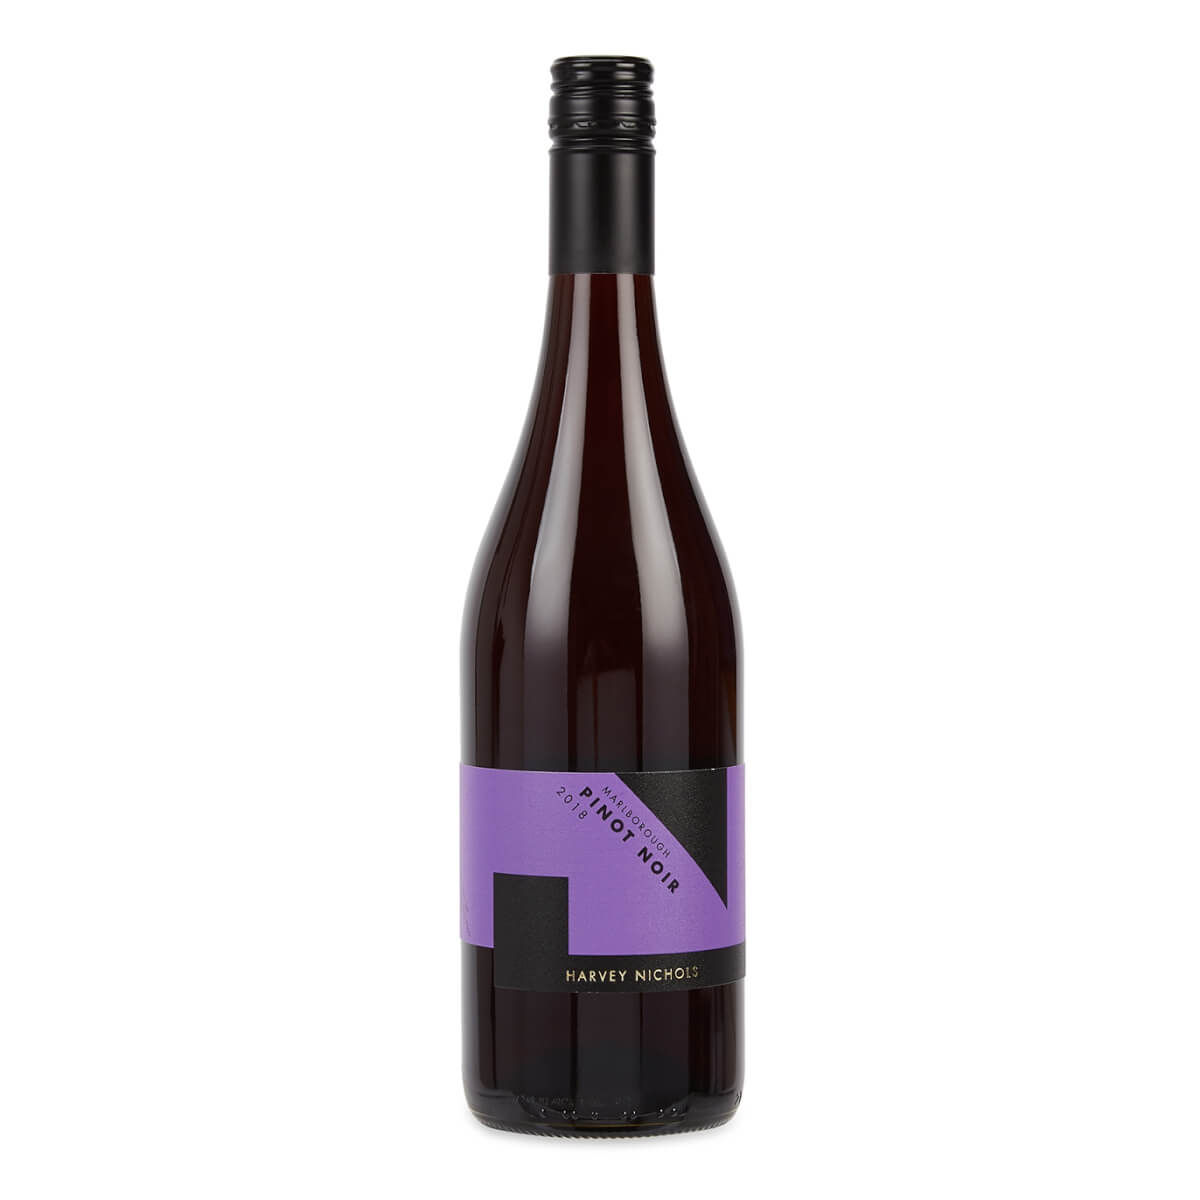 Harvey Nichols Marlborough Pinot Noir 2018 Red Wine